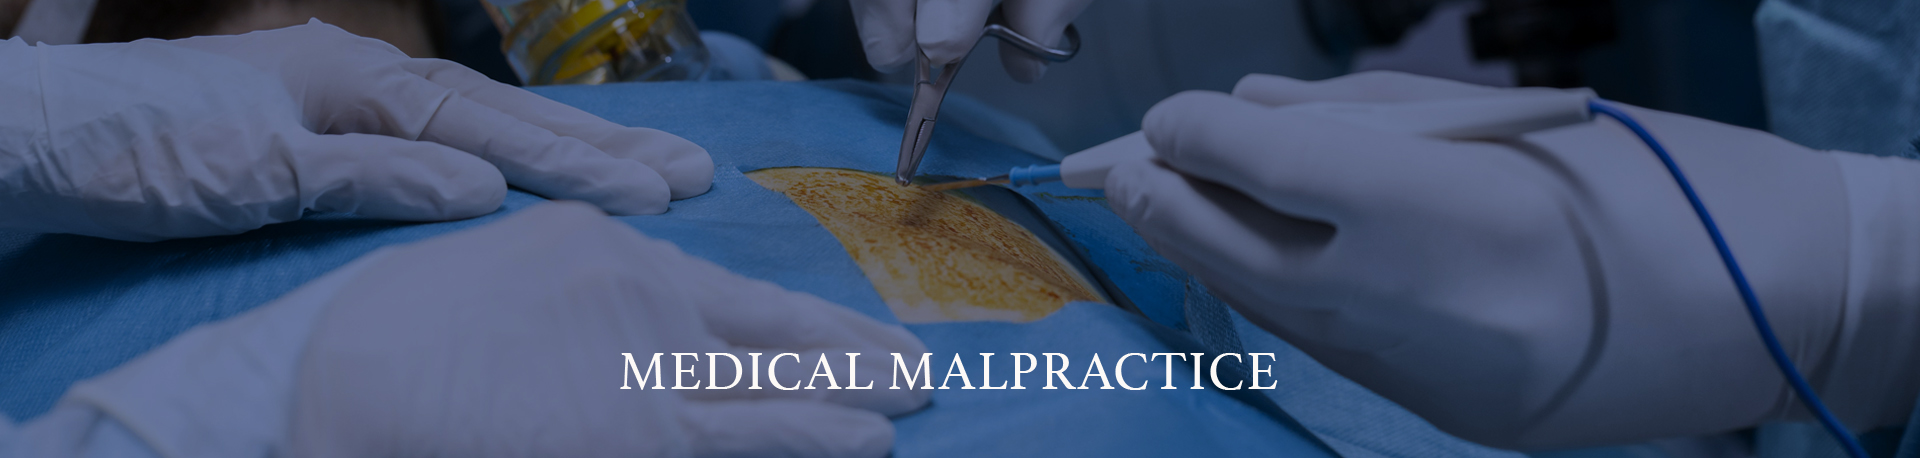 AOP_Medical_Malpractice_HEADER